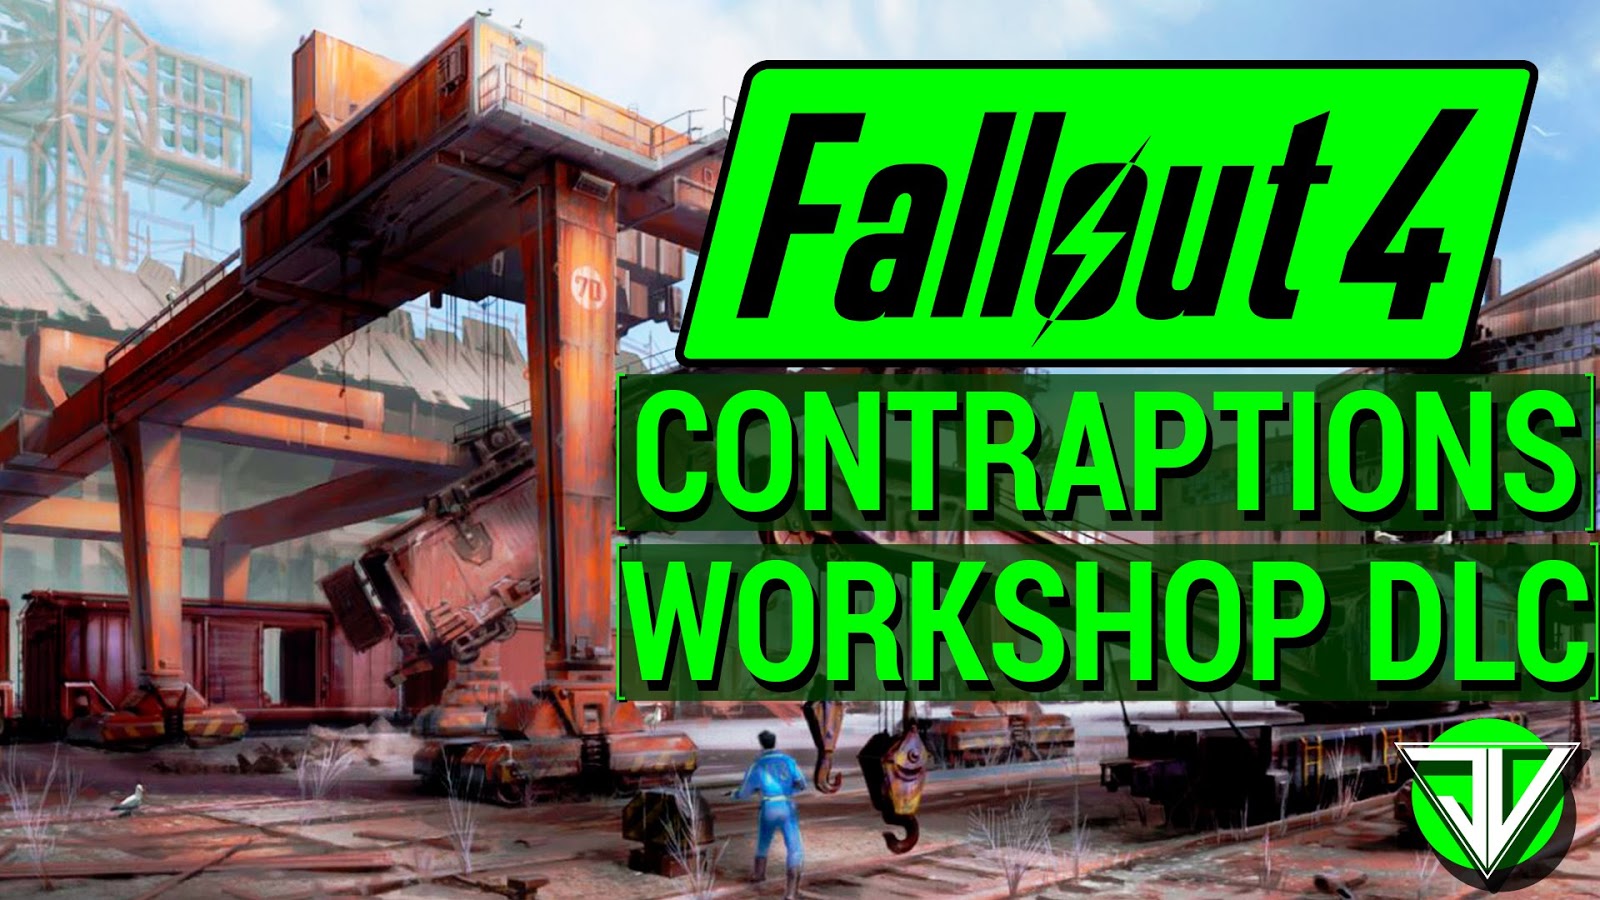 Contraptions workshop fallout 4 как начать фото 22